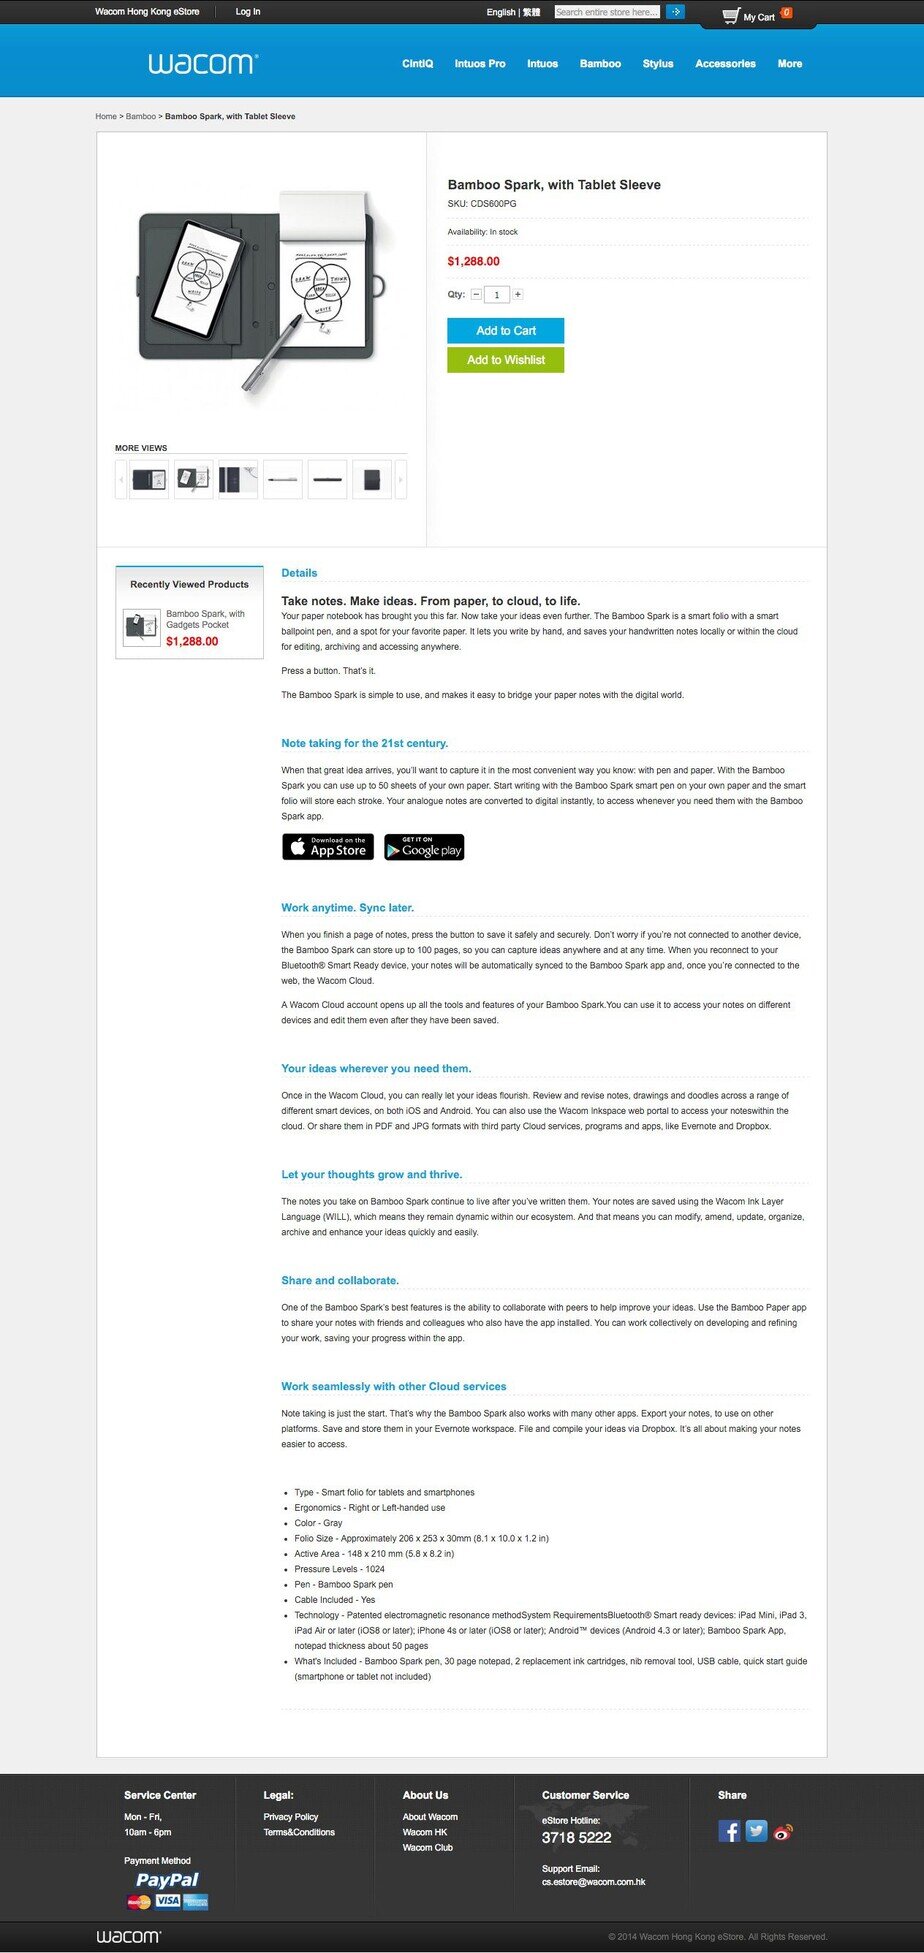 Wacom website screenshot for desktop version 4 of 4